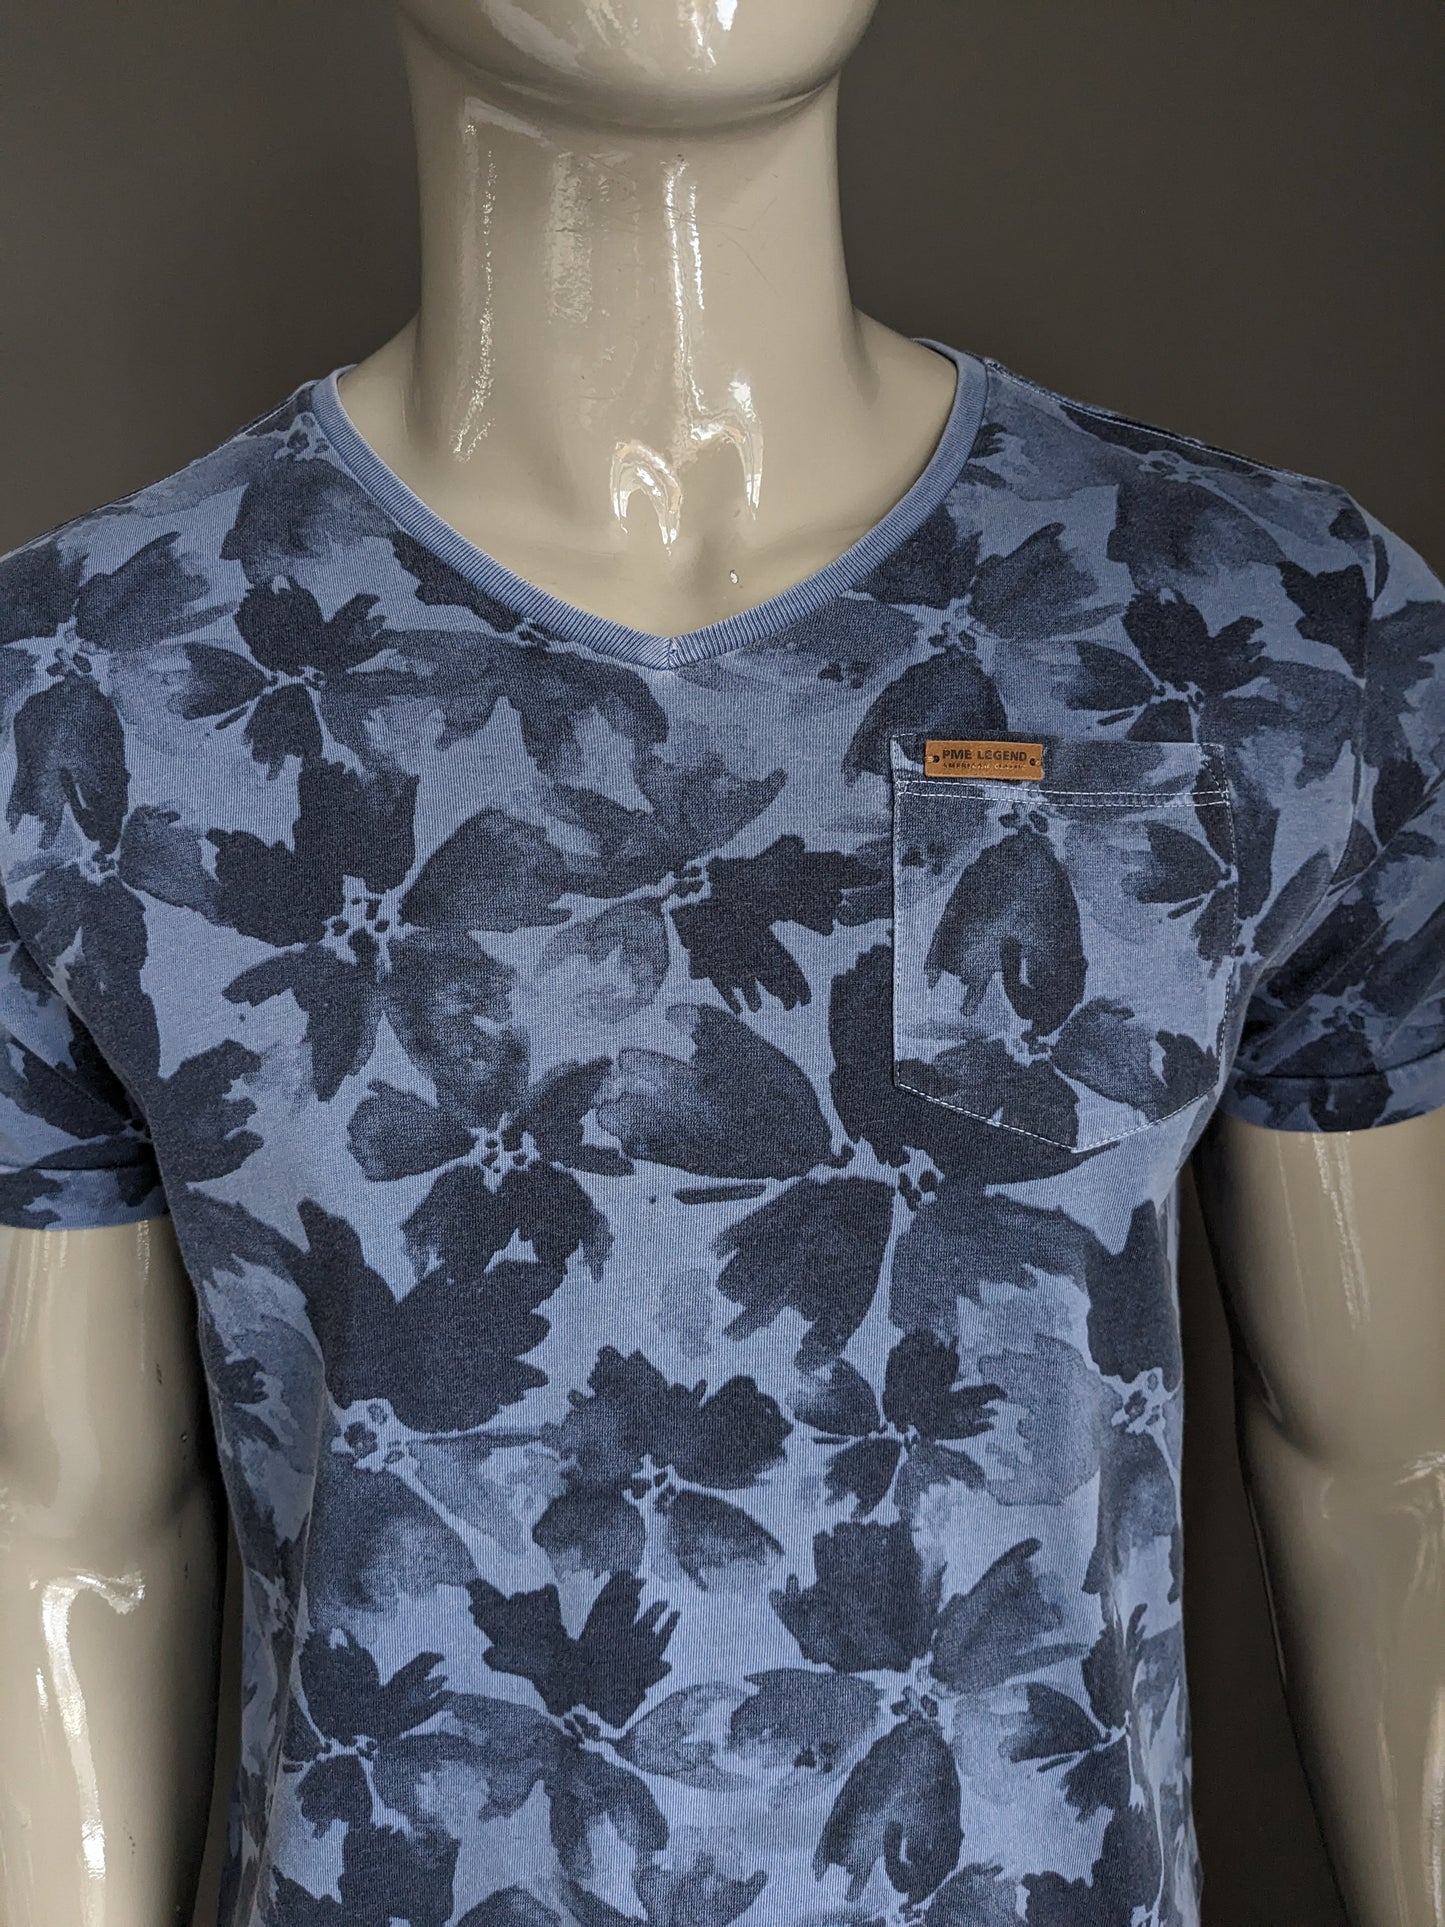 PME Legend shirt with V-neck. Blue flowers print. Size L.